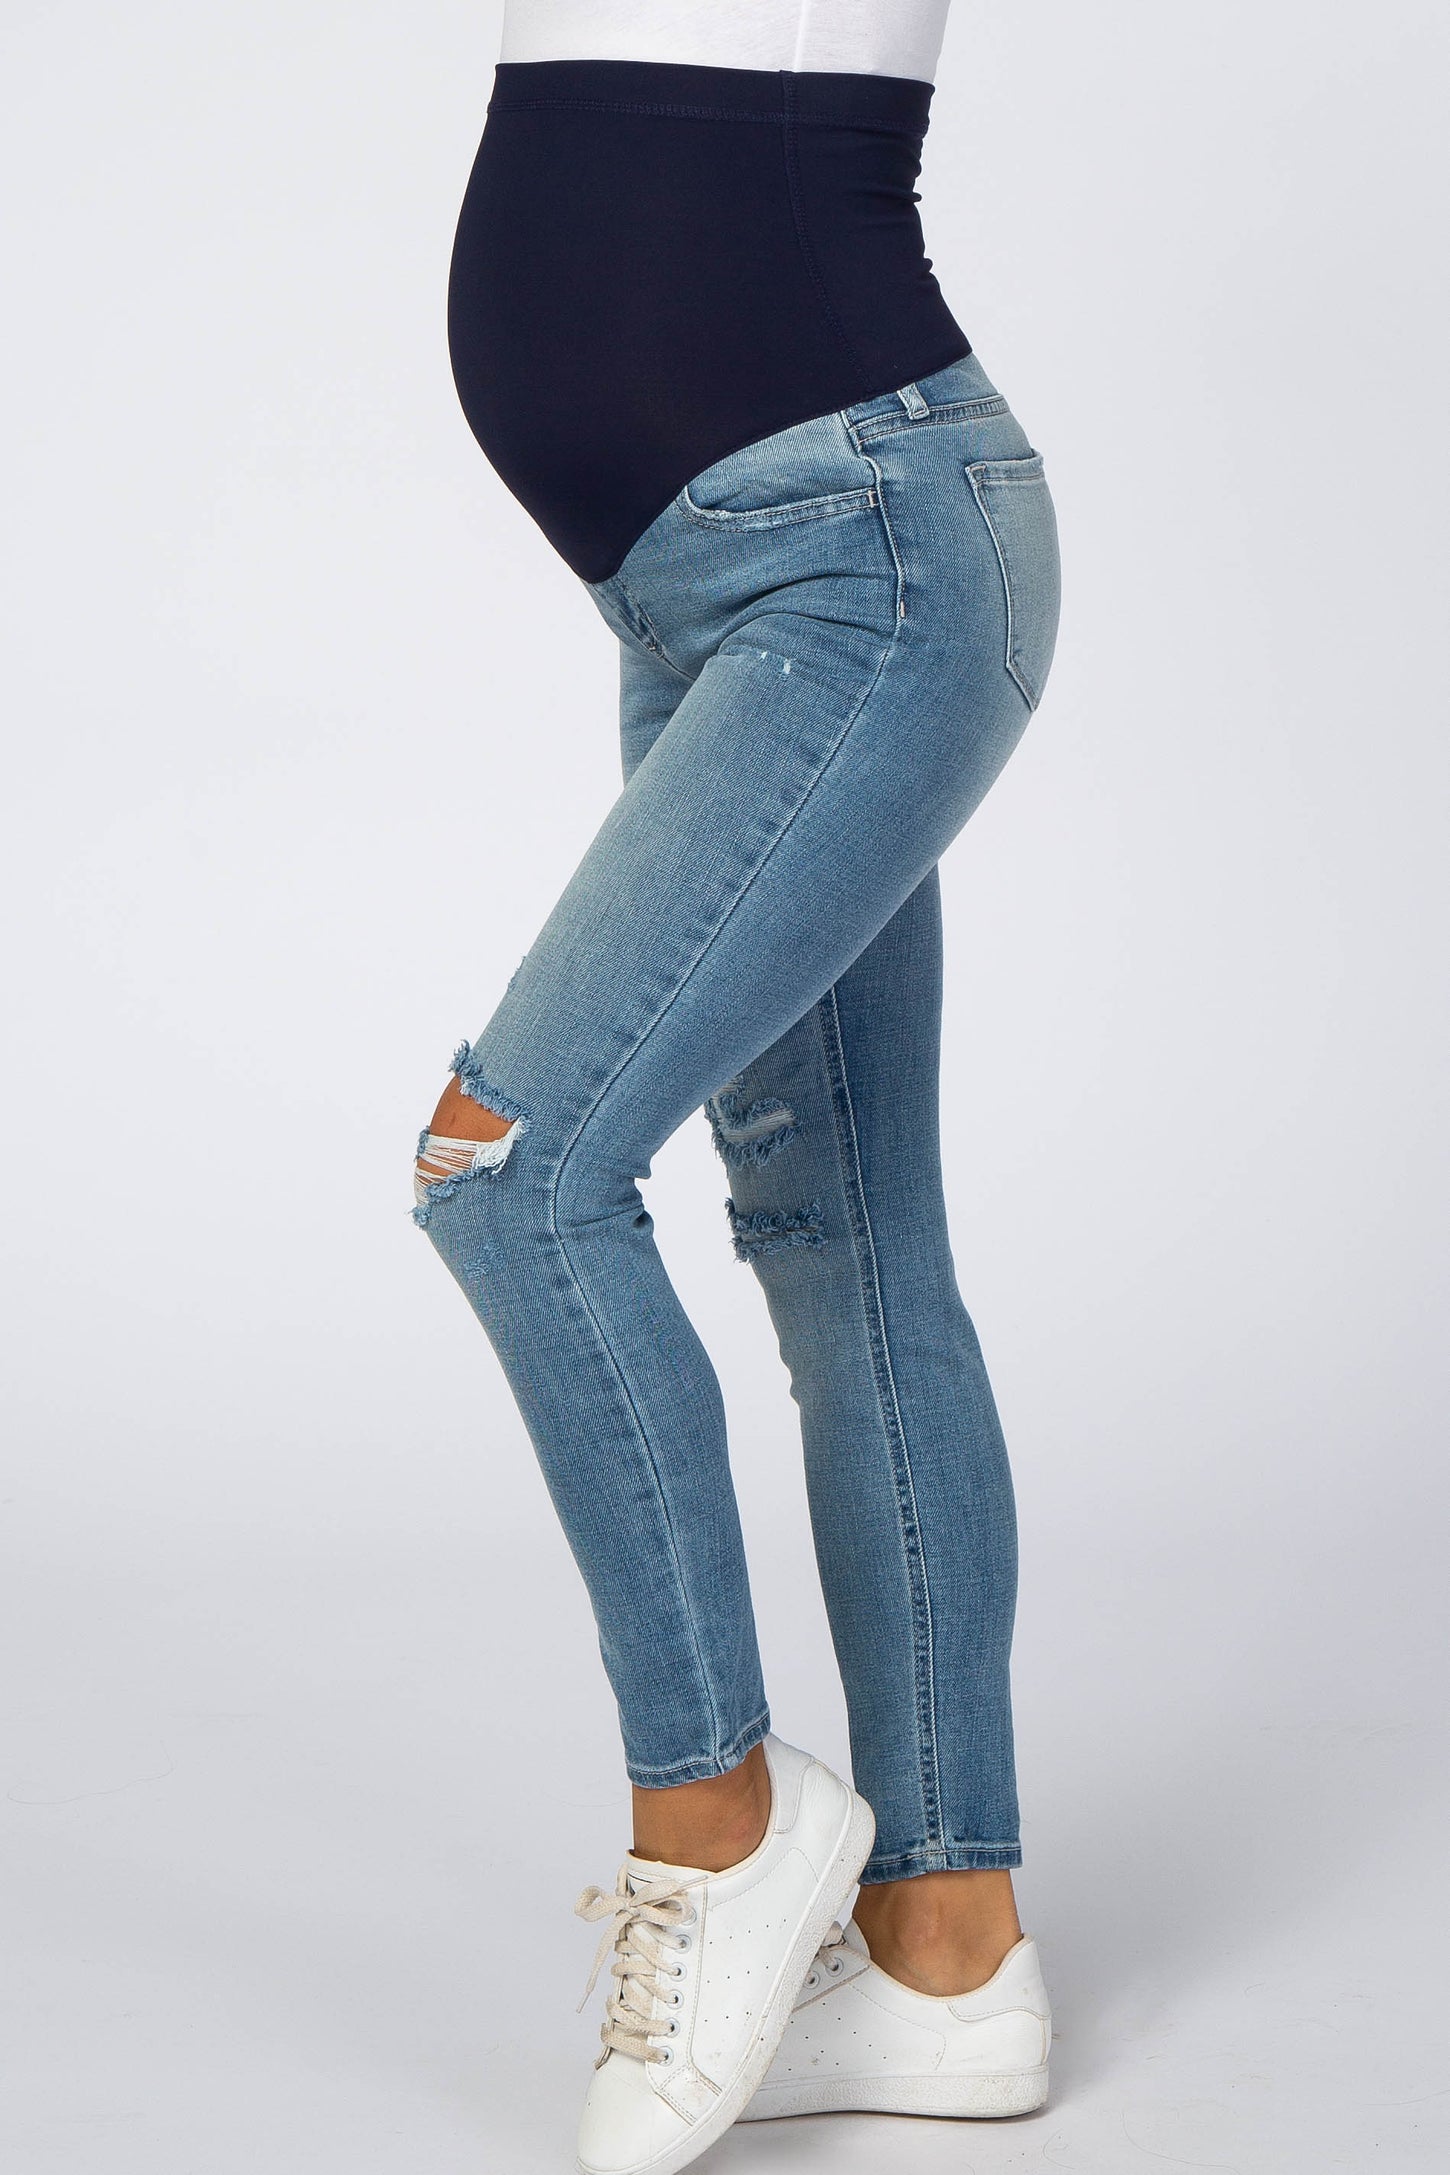 Maternity jeans - Bumpy Maternity Wear